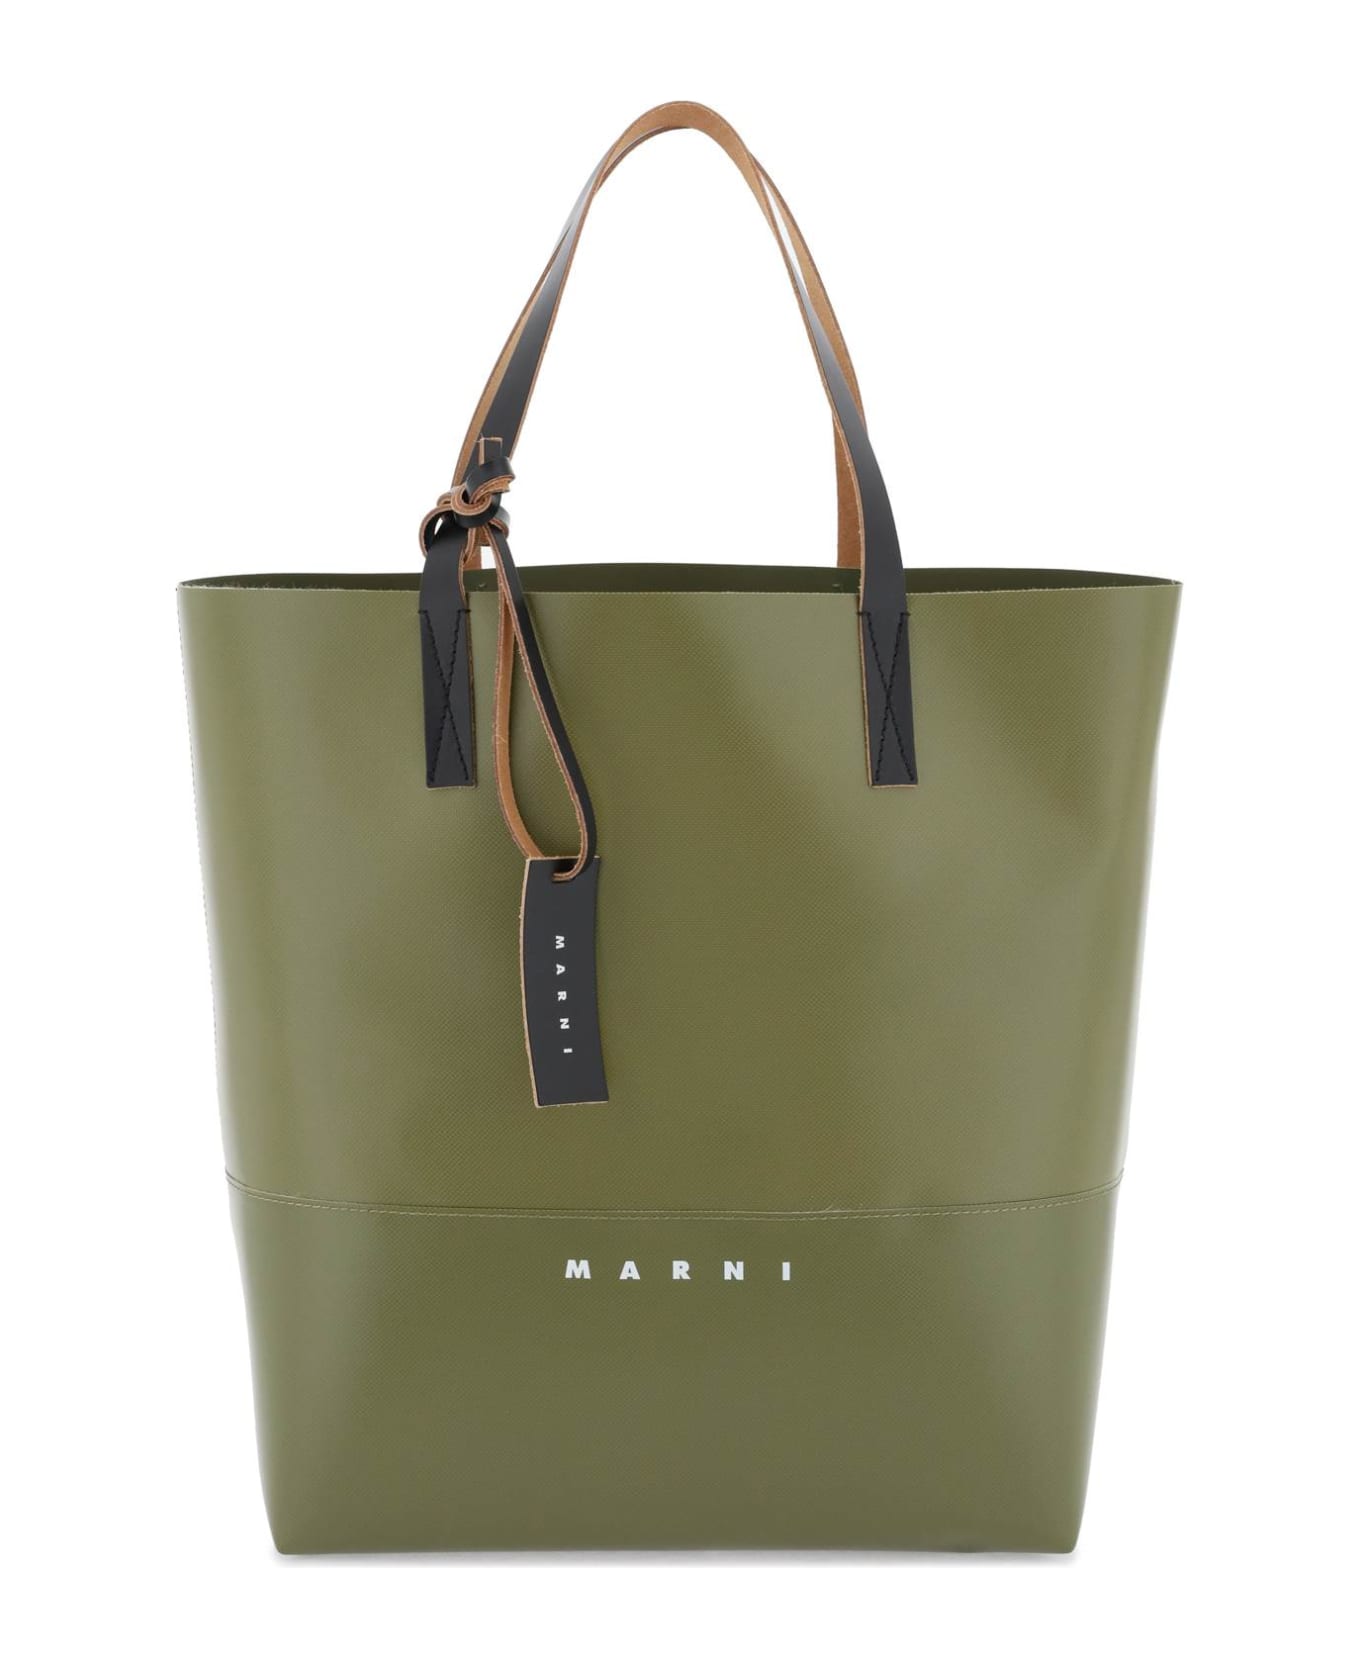 Marni Shopping Bag With Logo - LEAV GREEN (Green) ショルダーバッグ